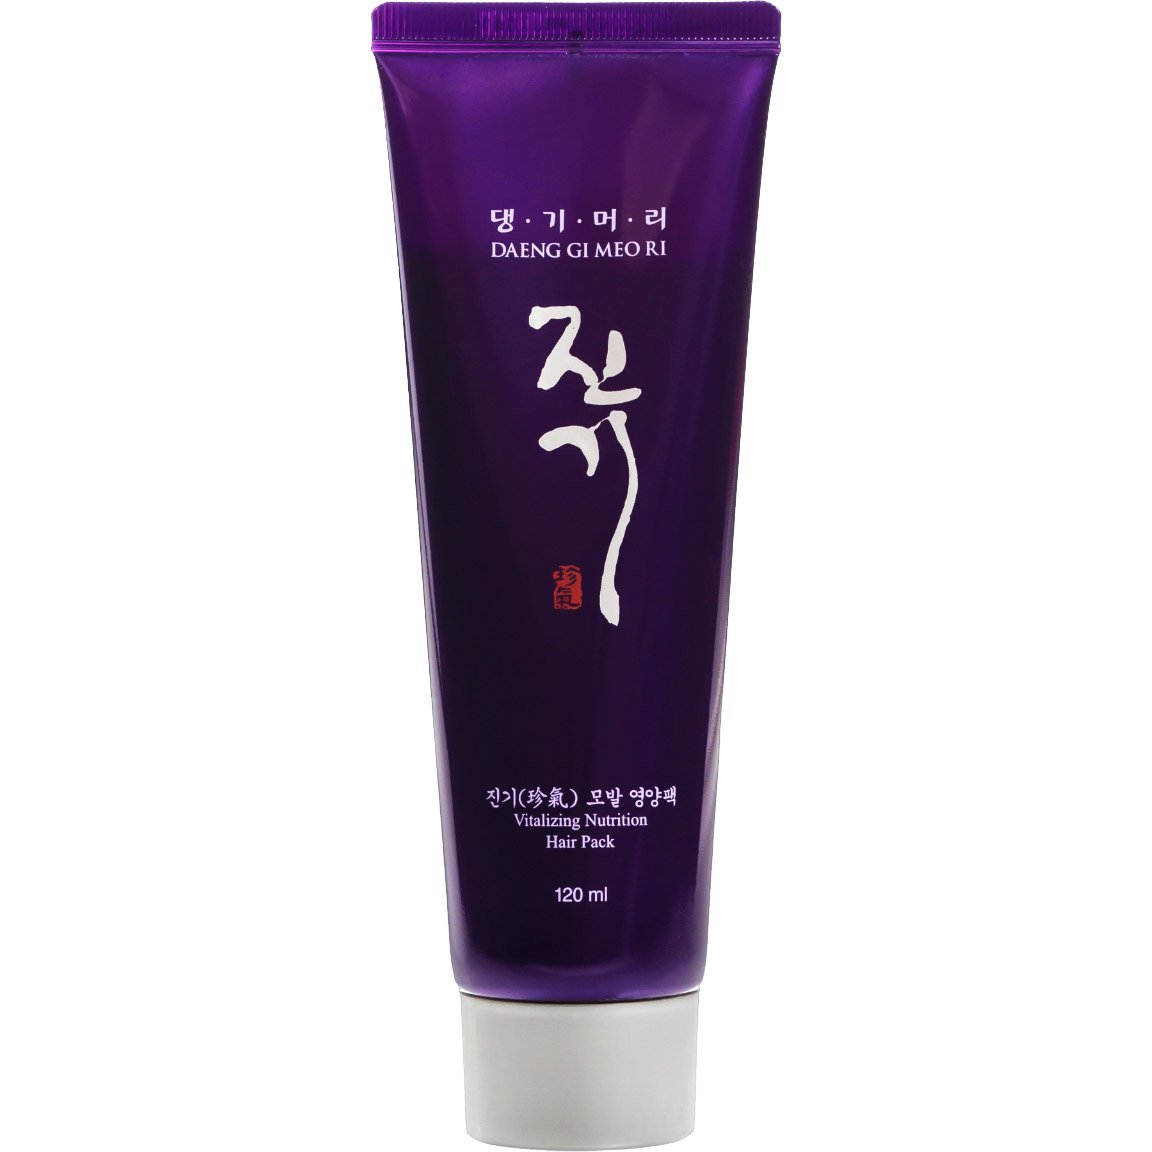 Восстанавливающая маска для питания волос Daeng Gi Meo Ri Vitalizing Nutrition Hair Pack, 120 мл - фото 1